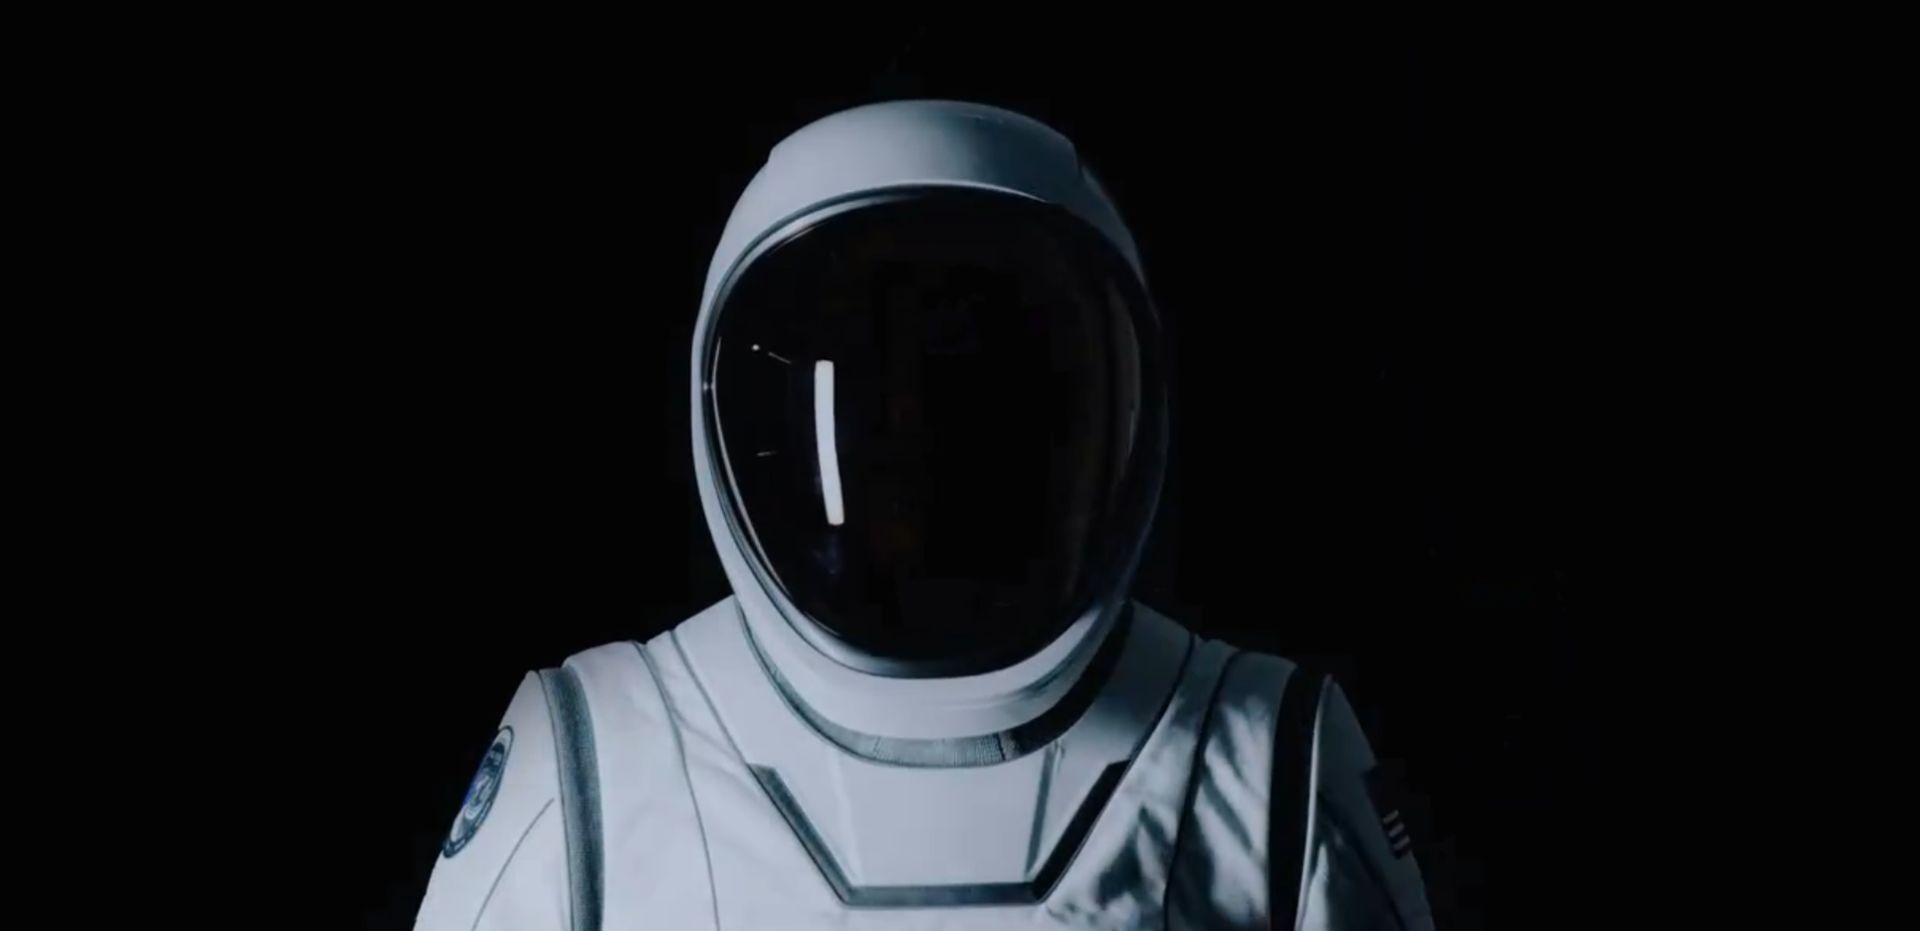 SpaceX unveils new astronaut suit